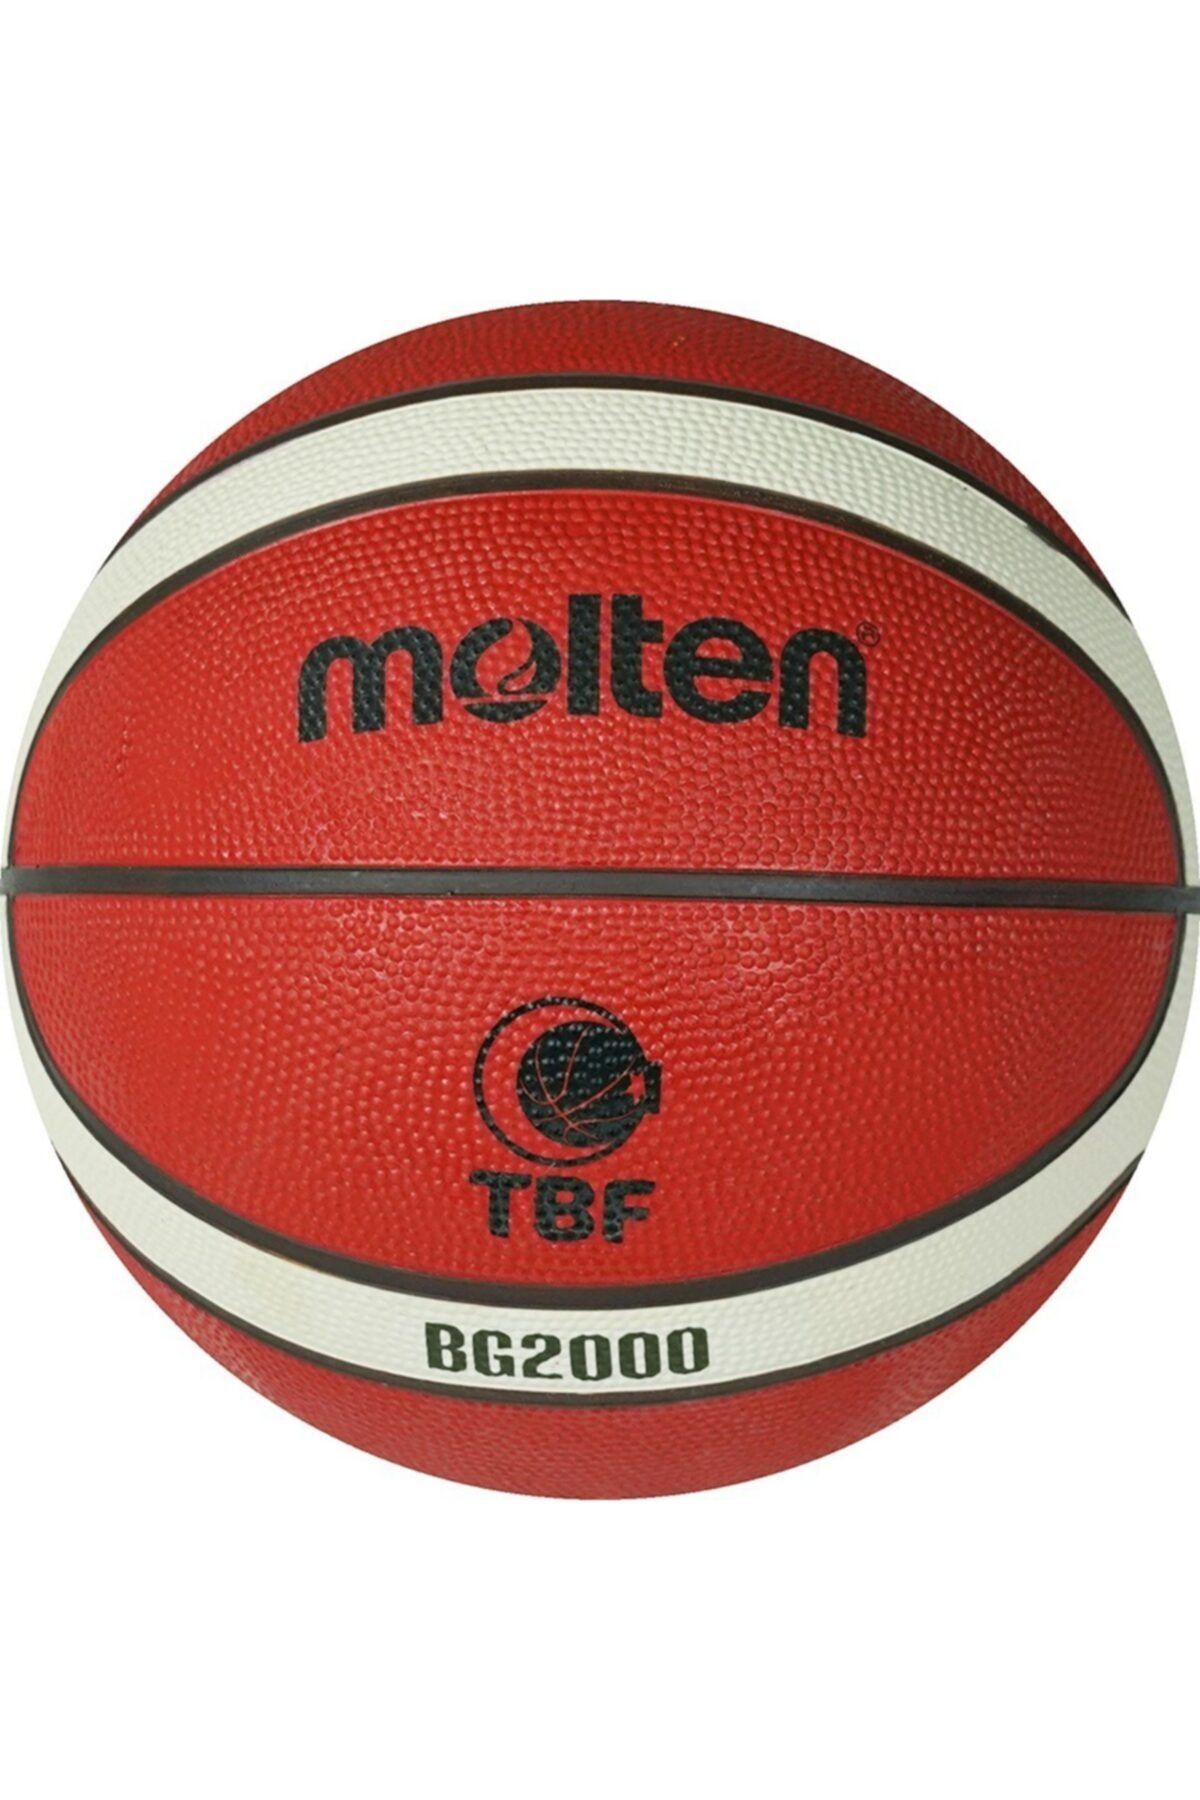 Molten B7g2000 Fıba Onaylı Kauçuk 7 No Basketbol Topu